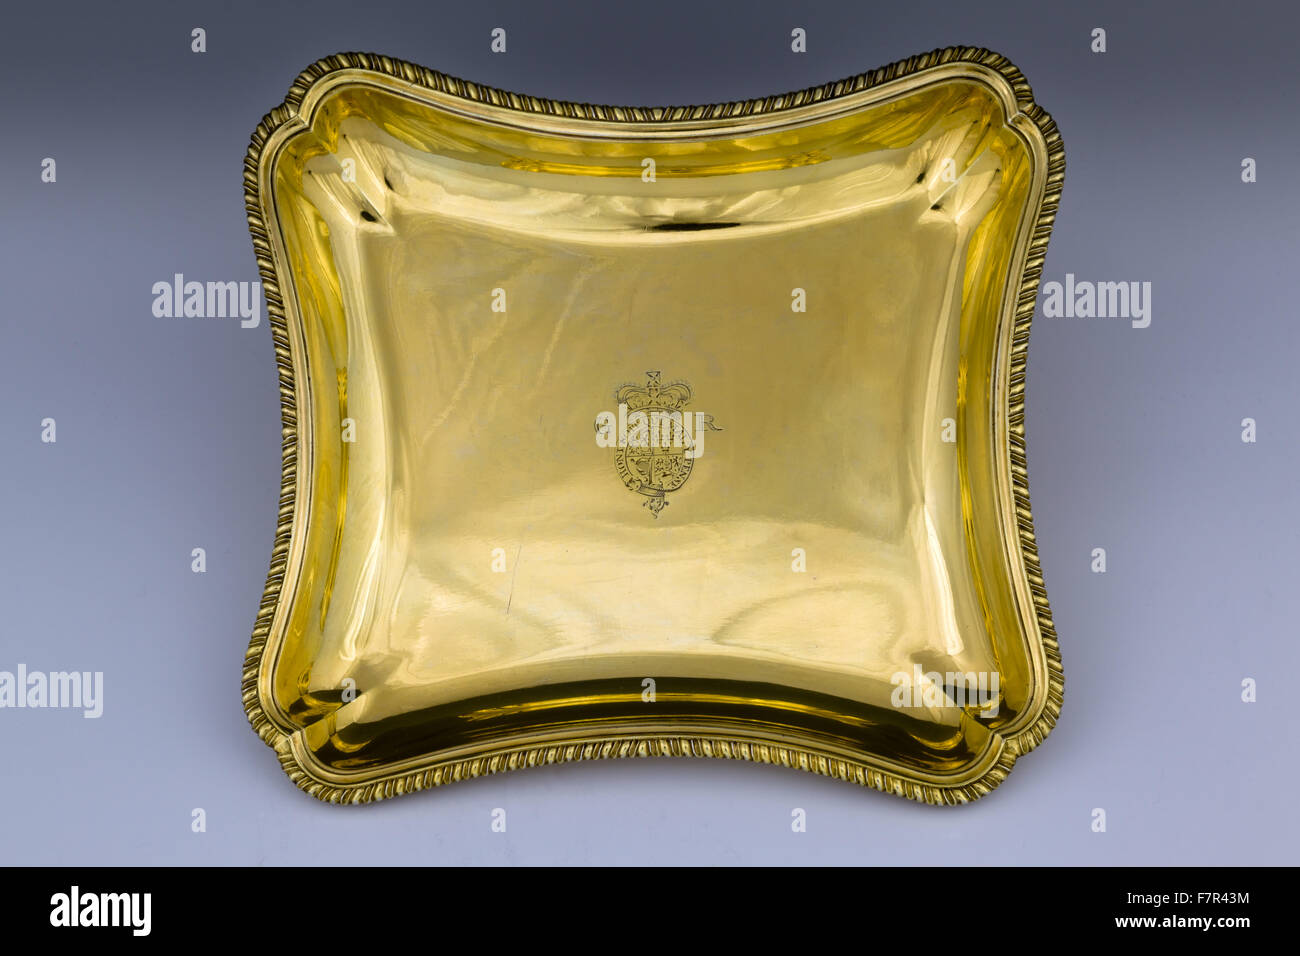 Kissenförmig Gericht, 1758, Simon Le Sage, vergoldetem Silber bei Ickworth, Suffolk. National Trust Inventar Nr. 852067.1-4. Stockfoto